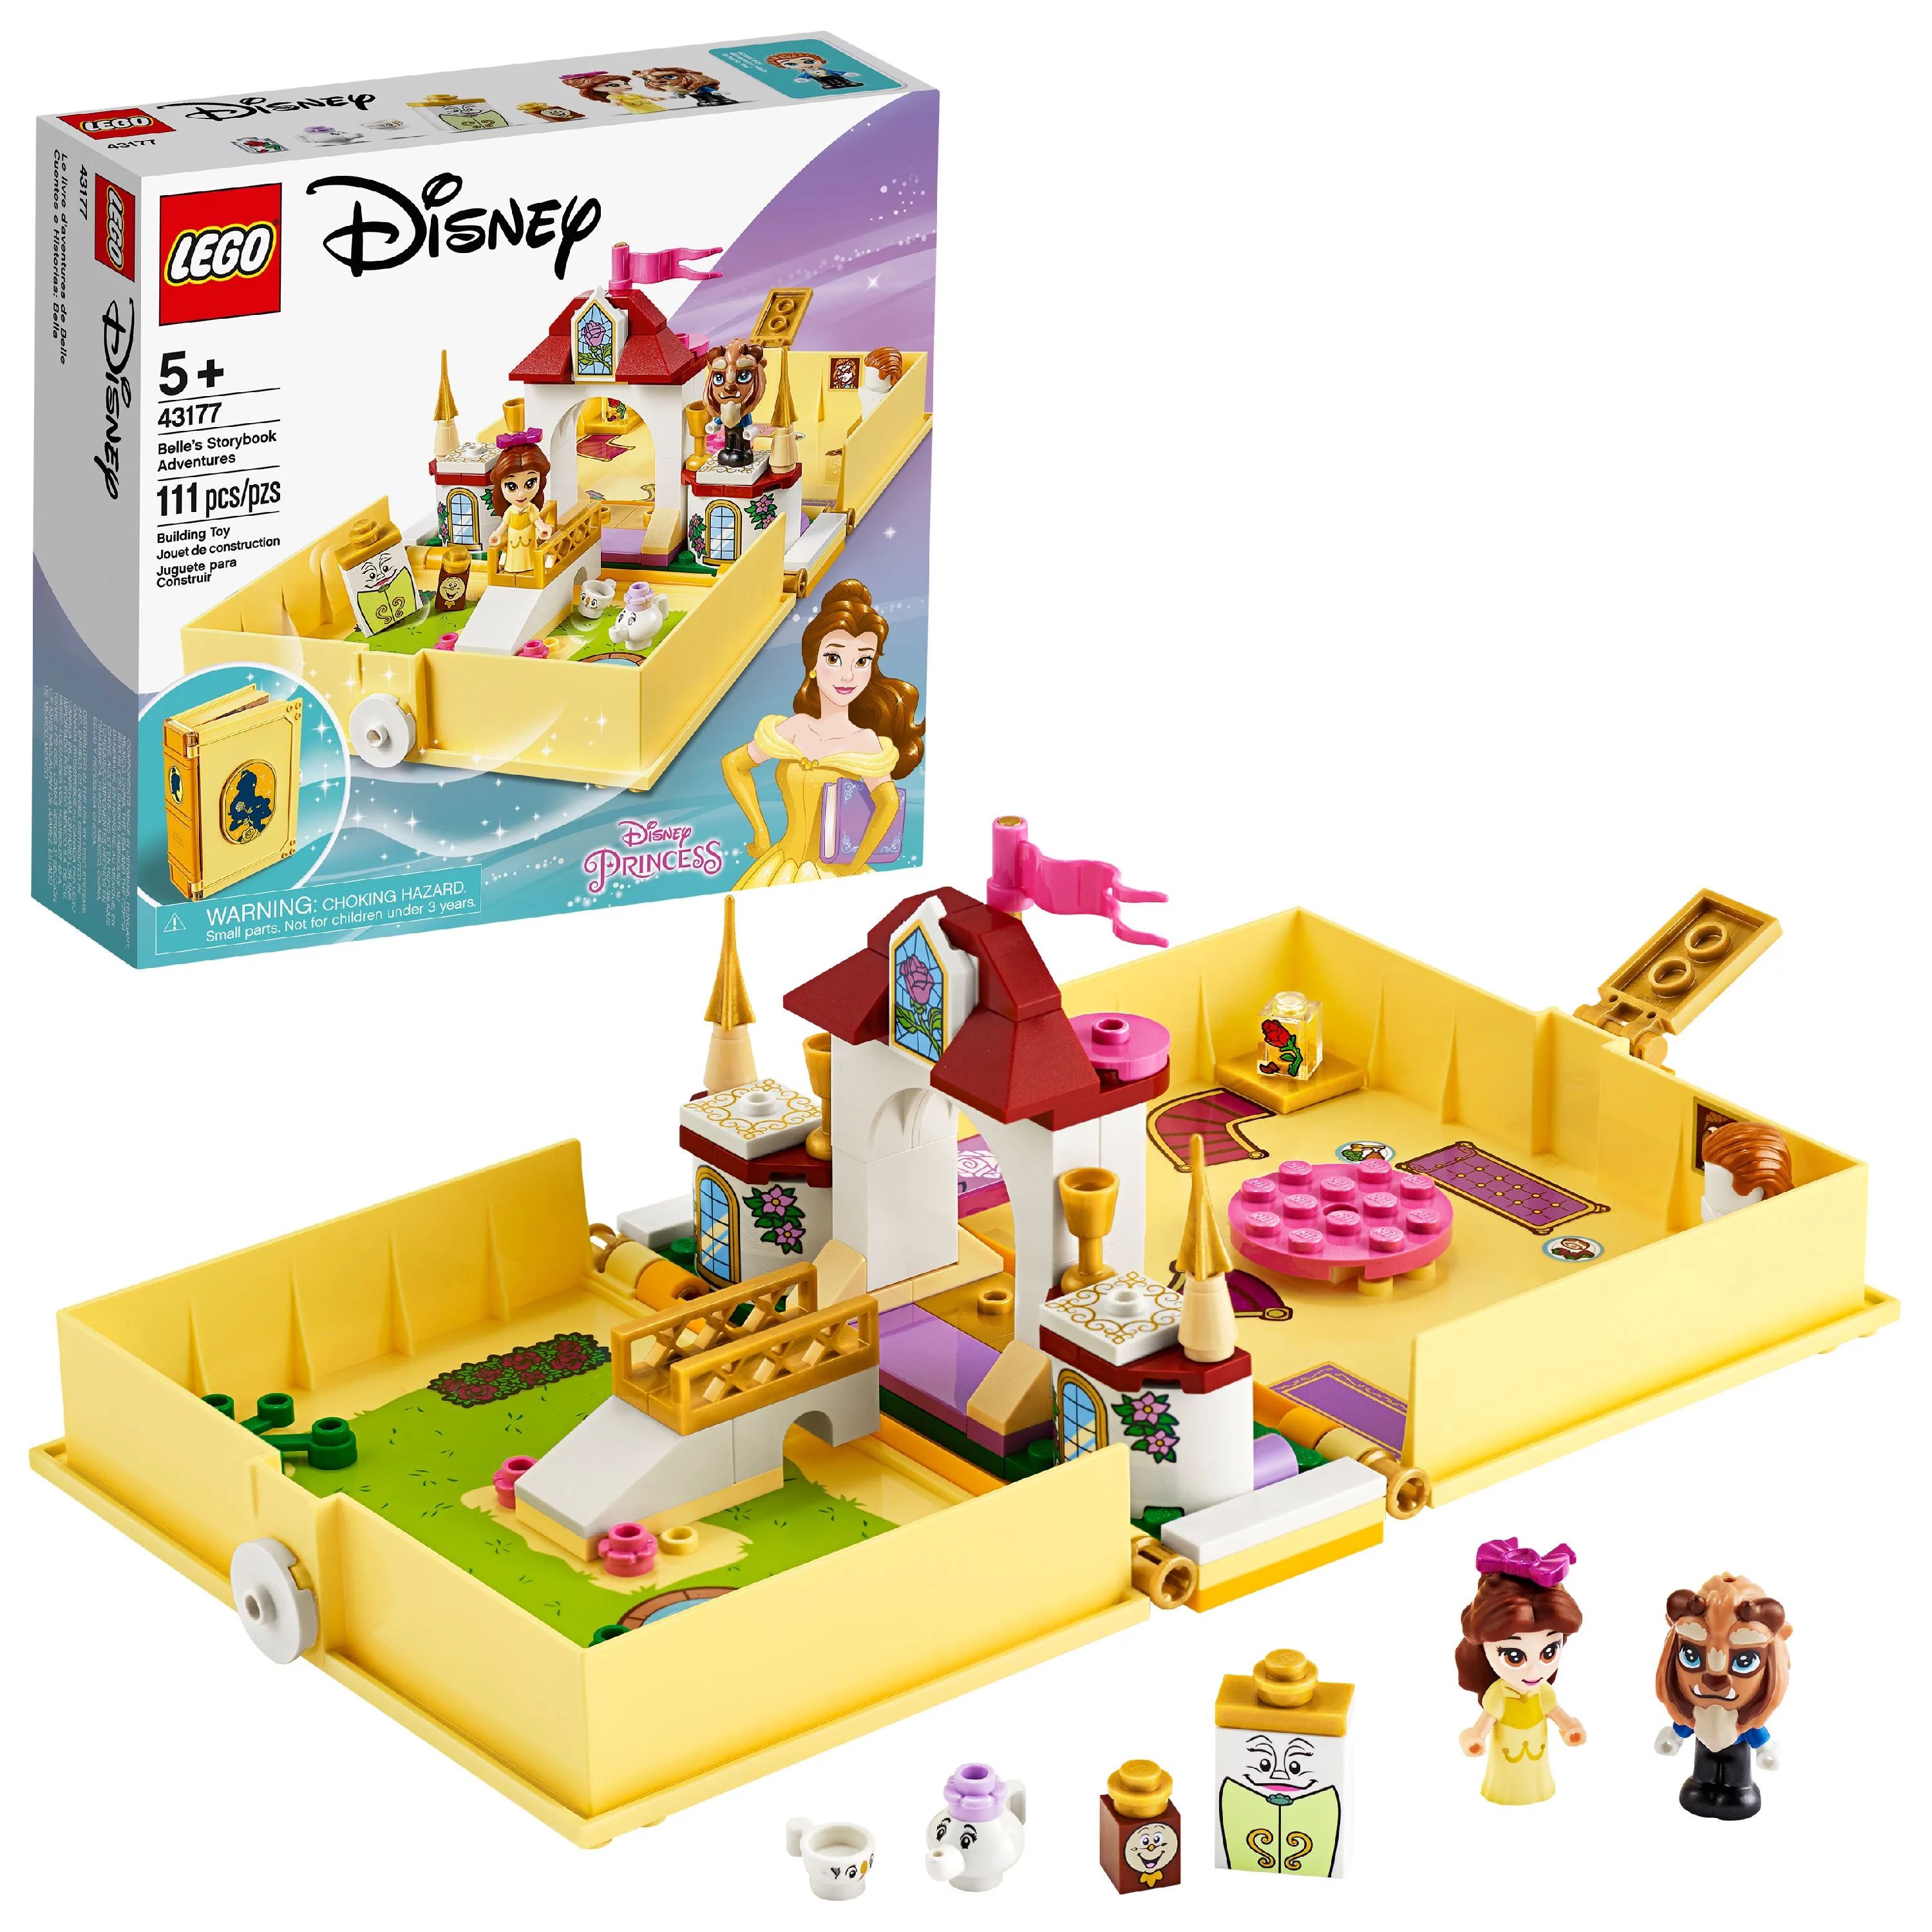 LEGO Disney Belle's Storybook Adventures 43177 Building Kit Toy (111 Pieces) | Walmart (US)